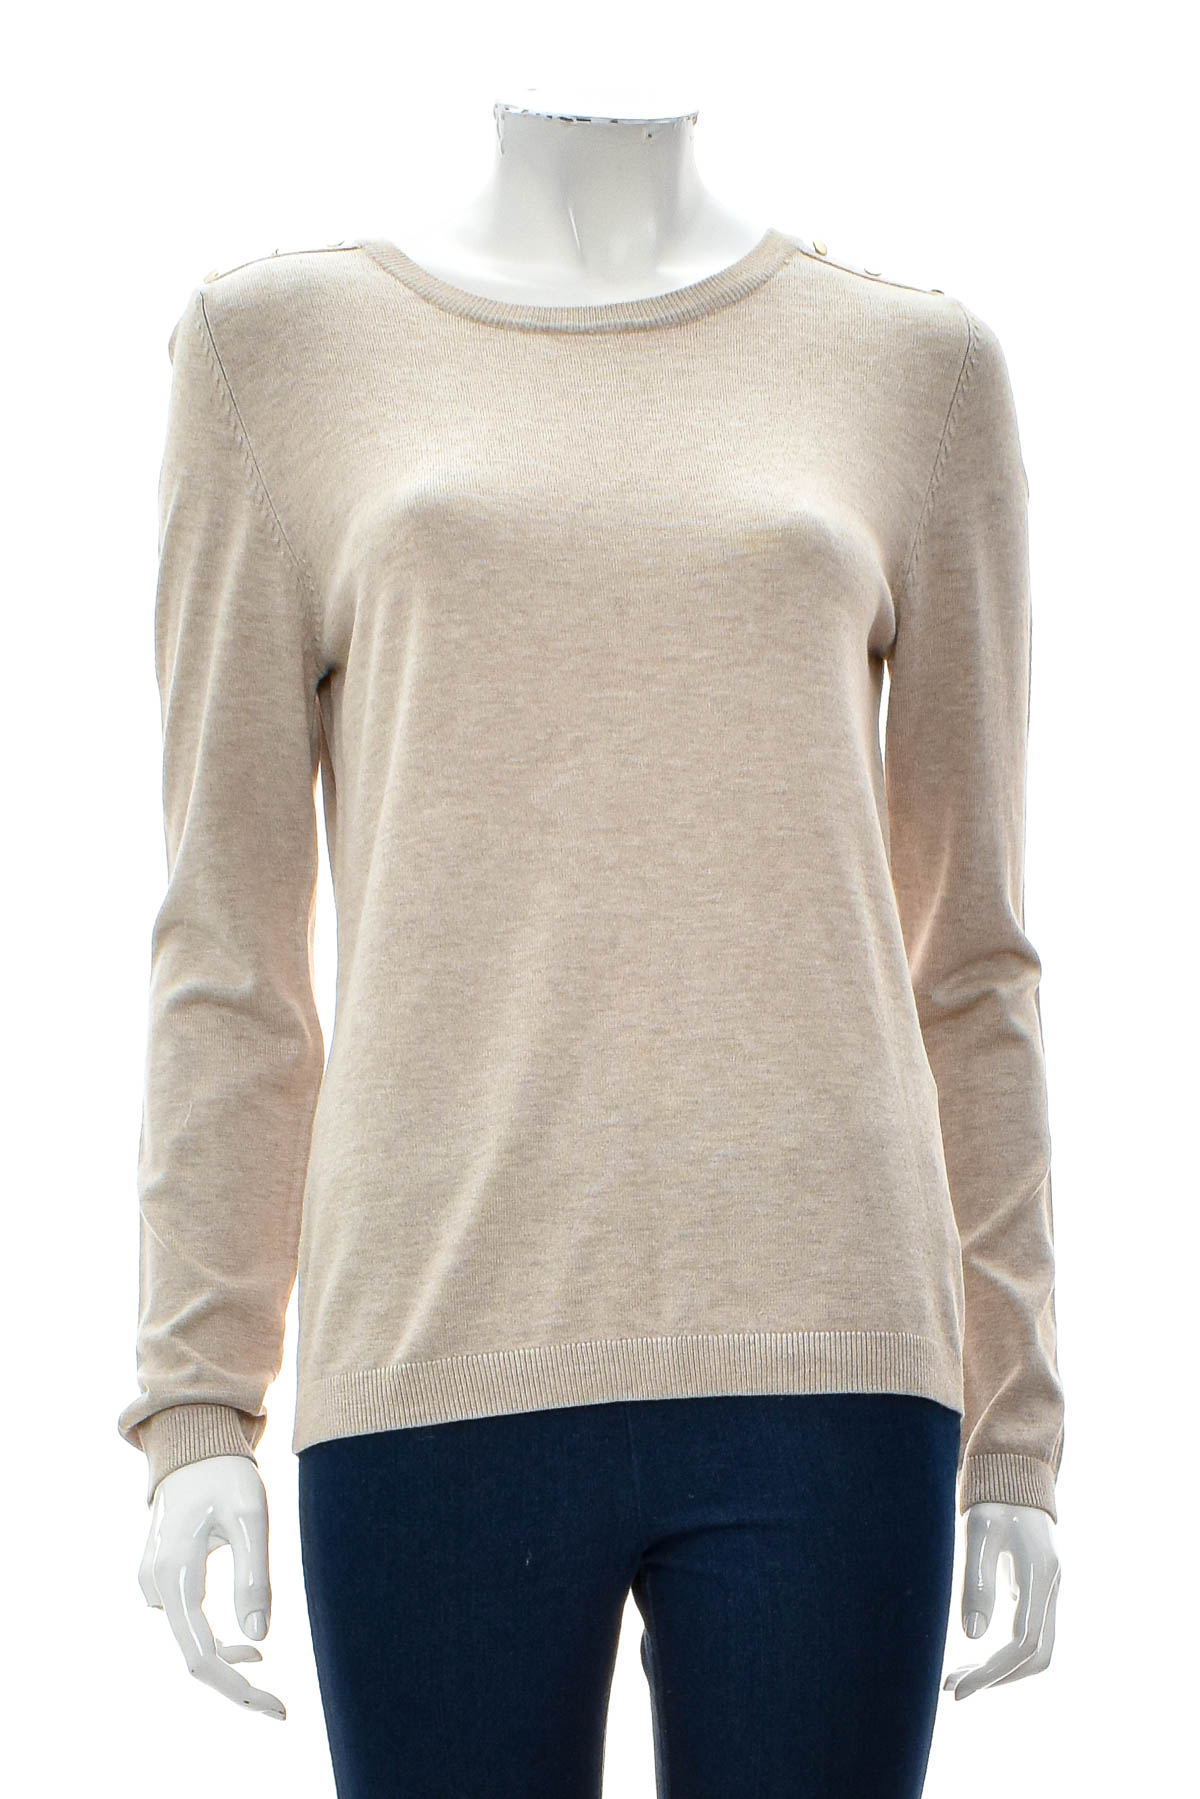 Women's sweater - Sinsay - 0